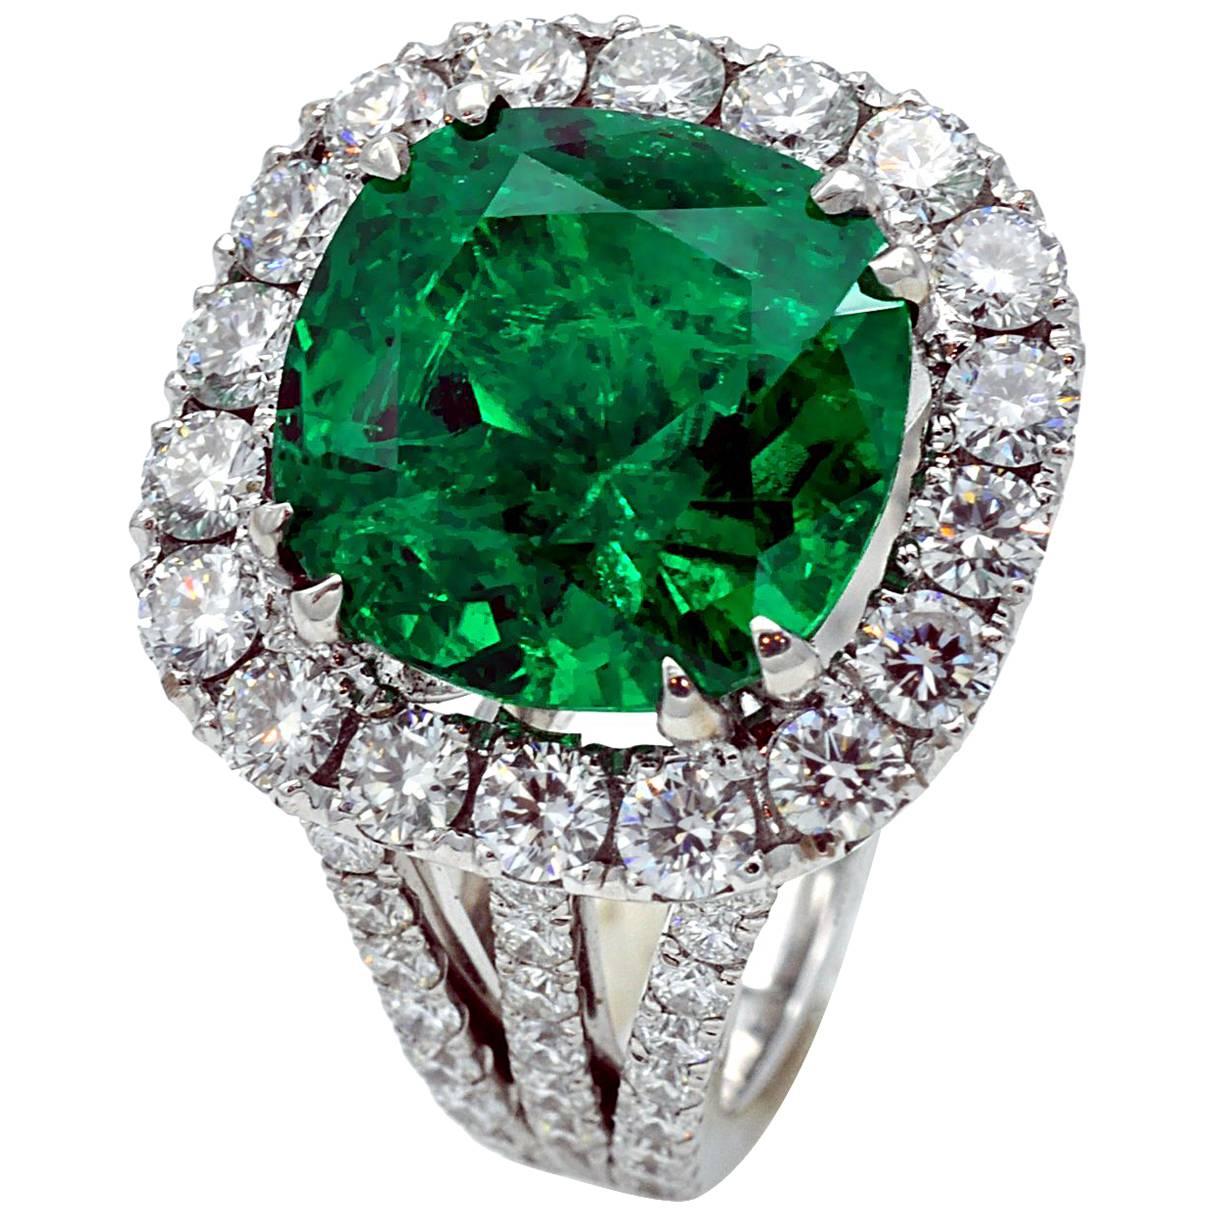 CGL Certified 9.37 Carat Colombian Emerald Diamond Ring